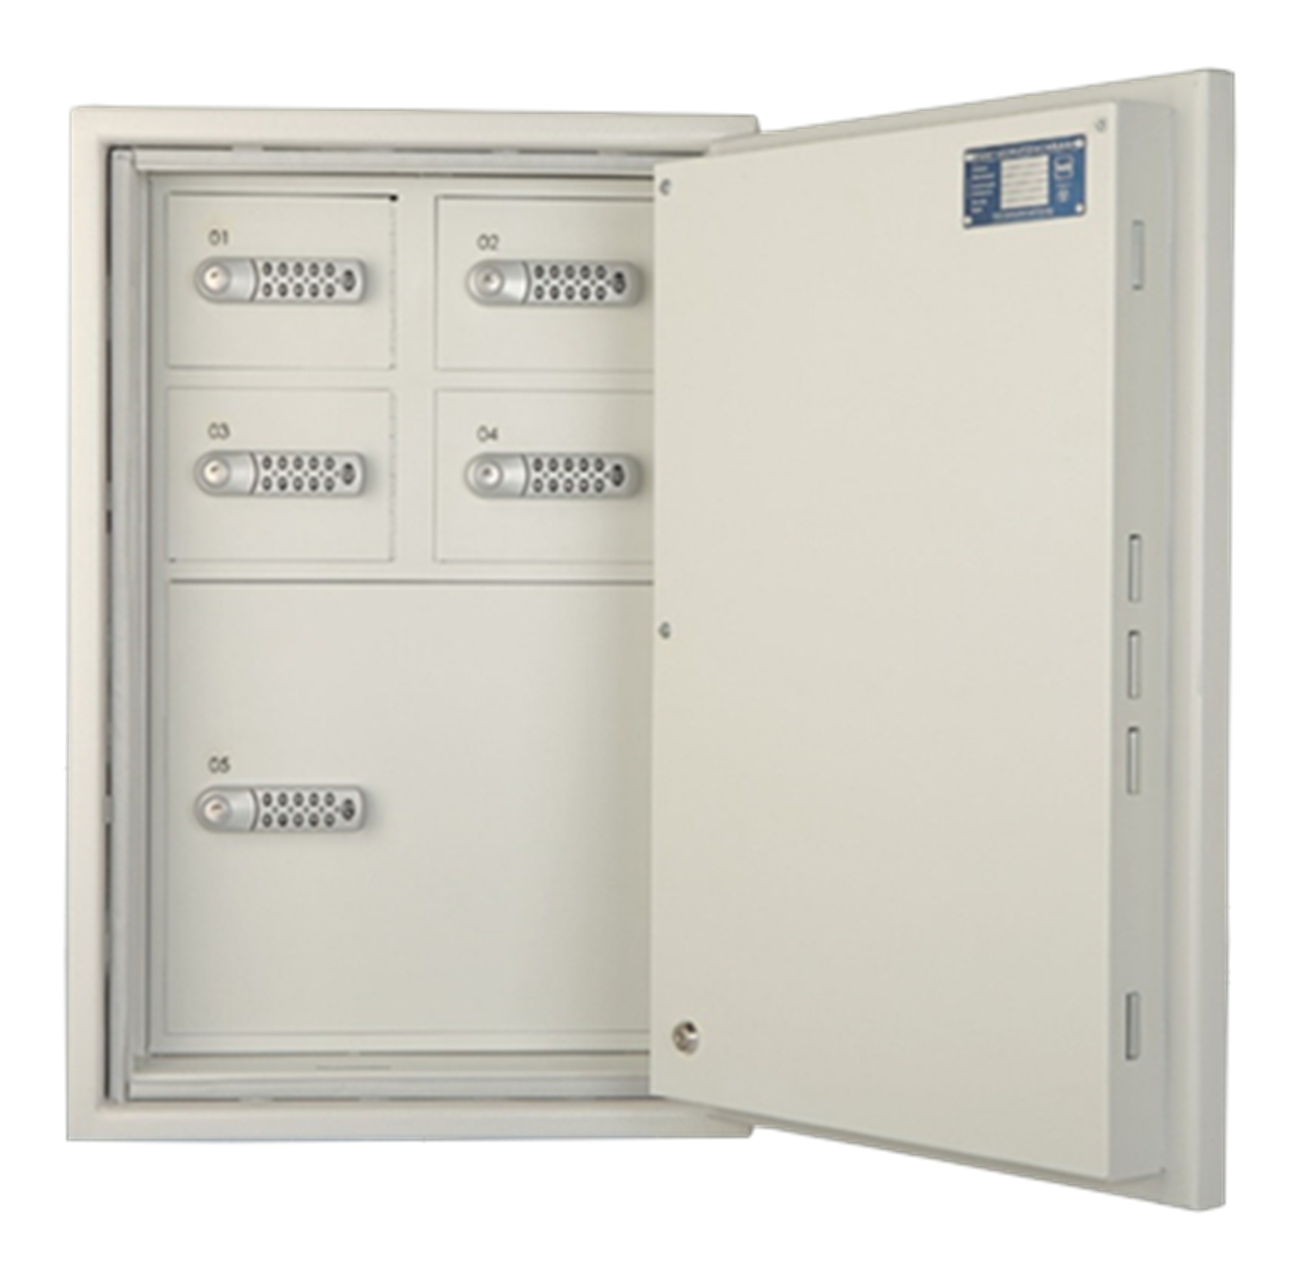 Interior equipment of Basic safes